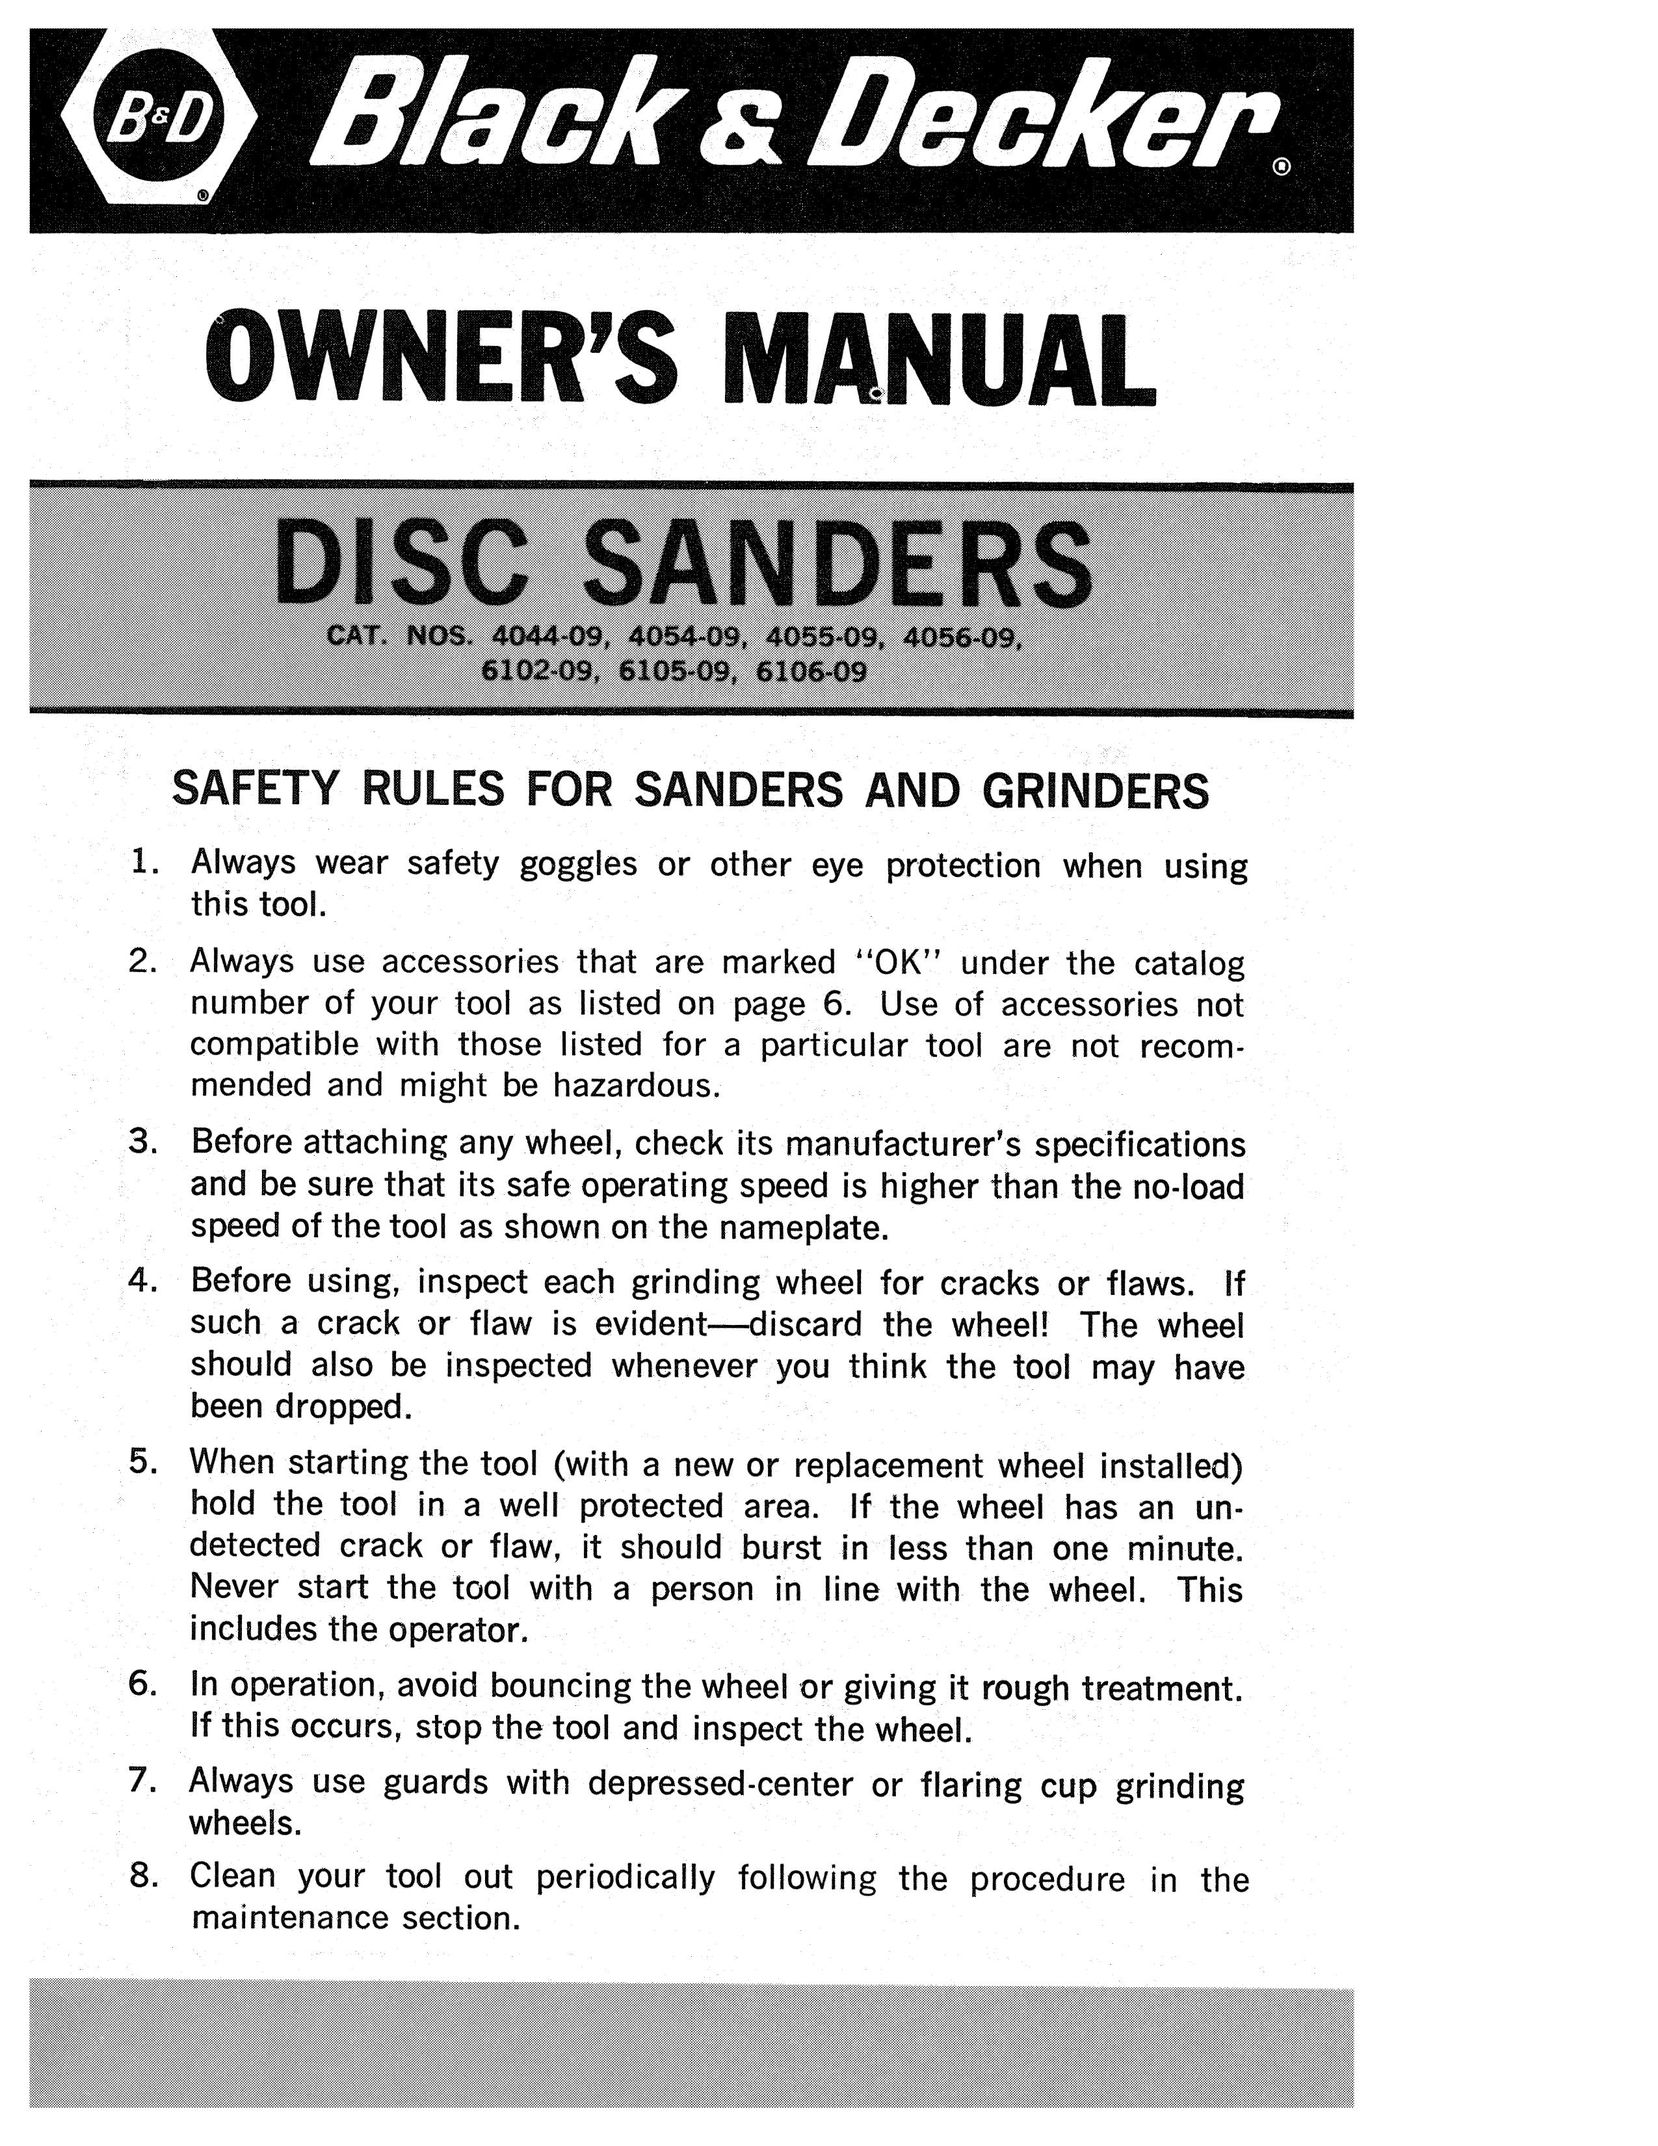 Black & Decker 6105-09 Sander User Manual